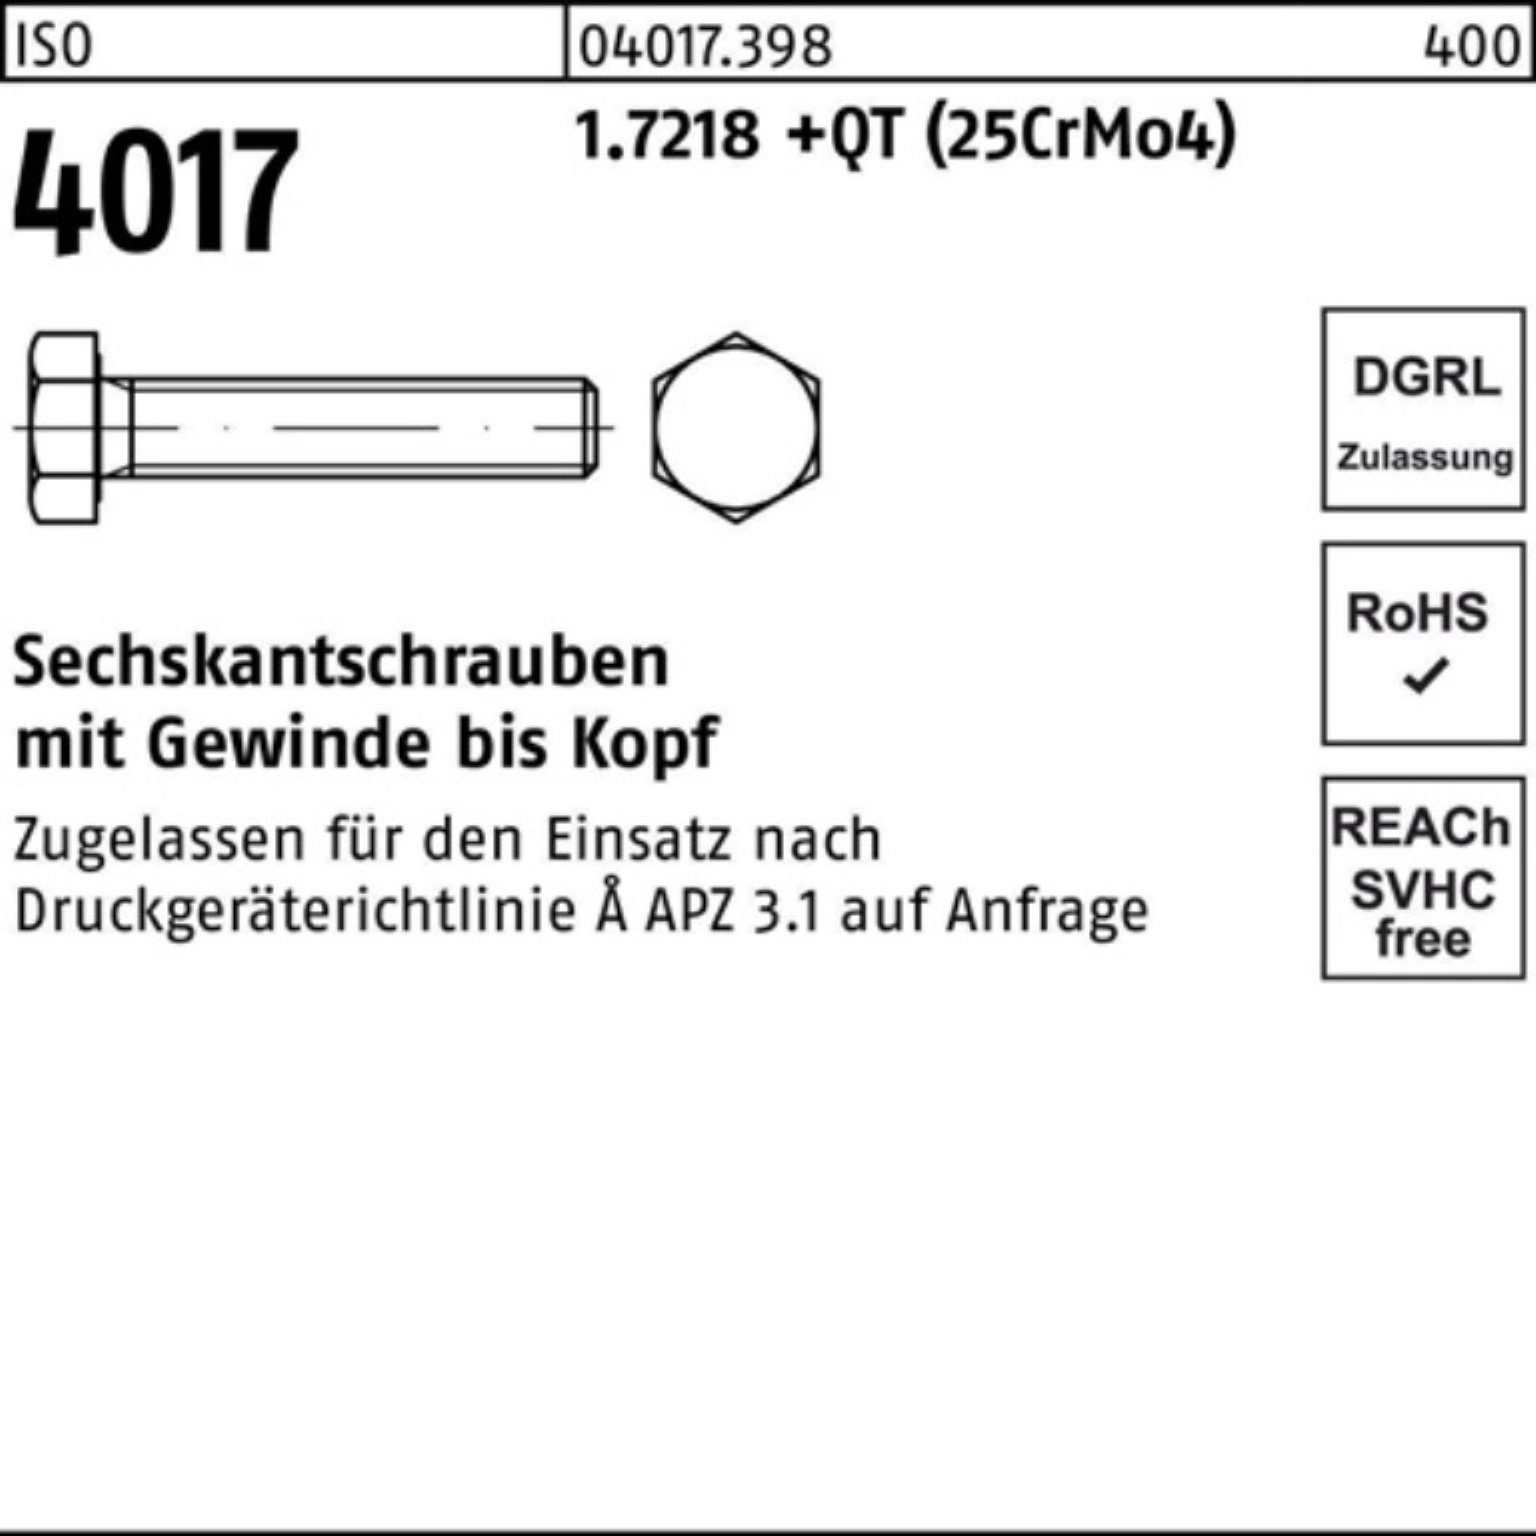 VG 100er (25CrMo4) Pack 4017 Bufab 1.7218 Sechskantschraube ISO 110 M33x Sechskantschraube +QT